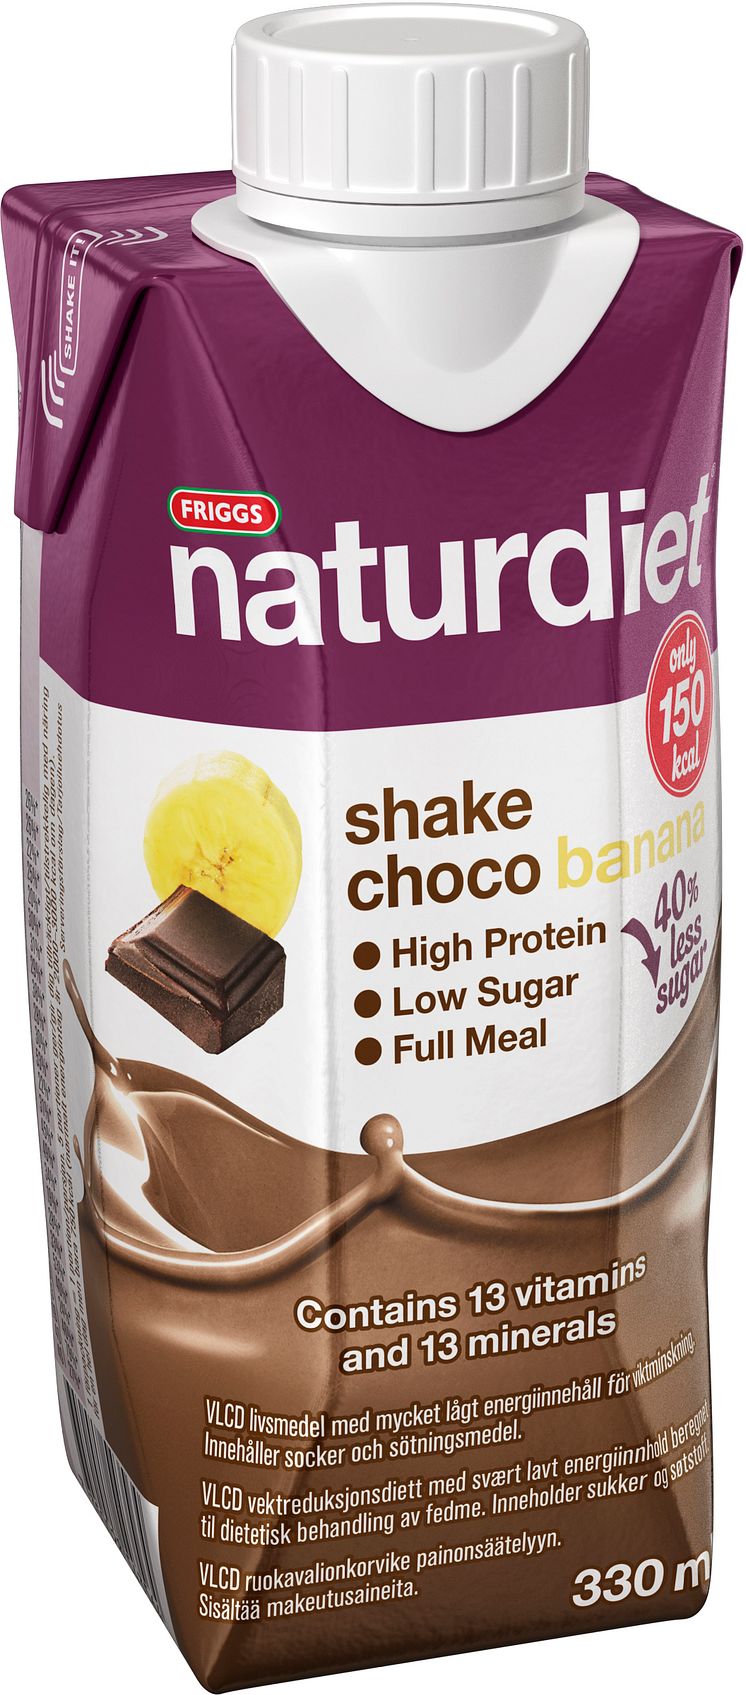 Naturdiet Choco Banana shake - nu med mindre socker